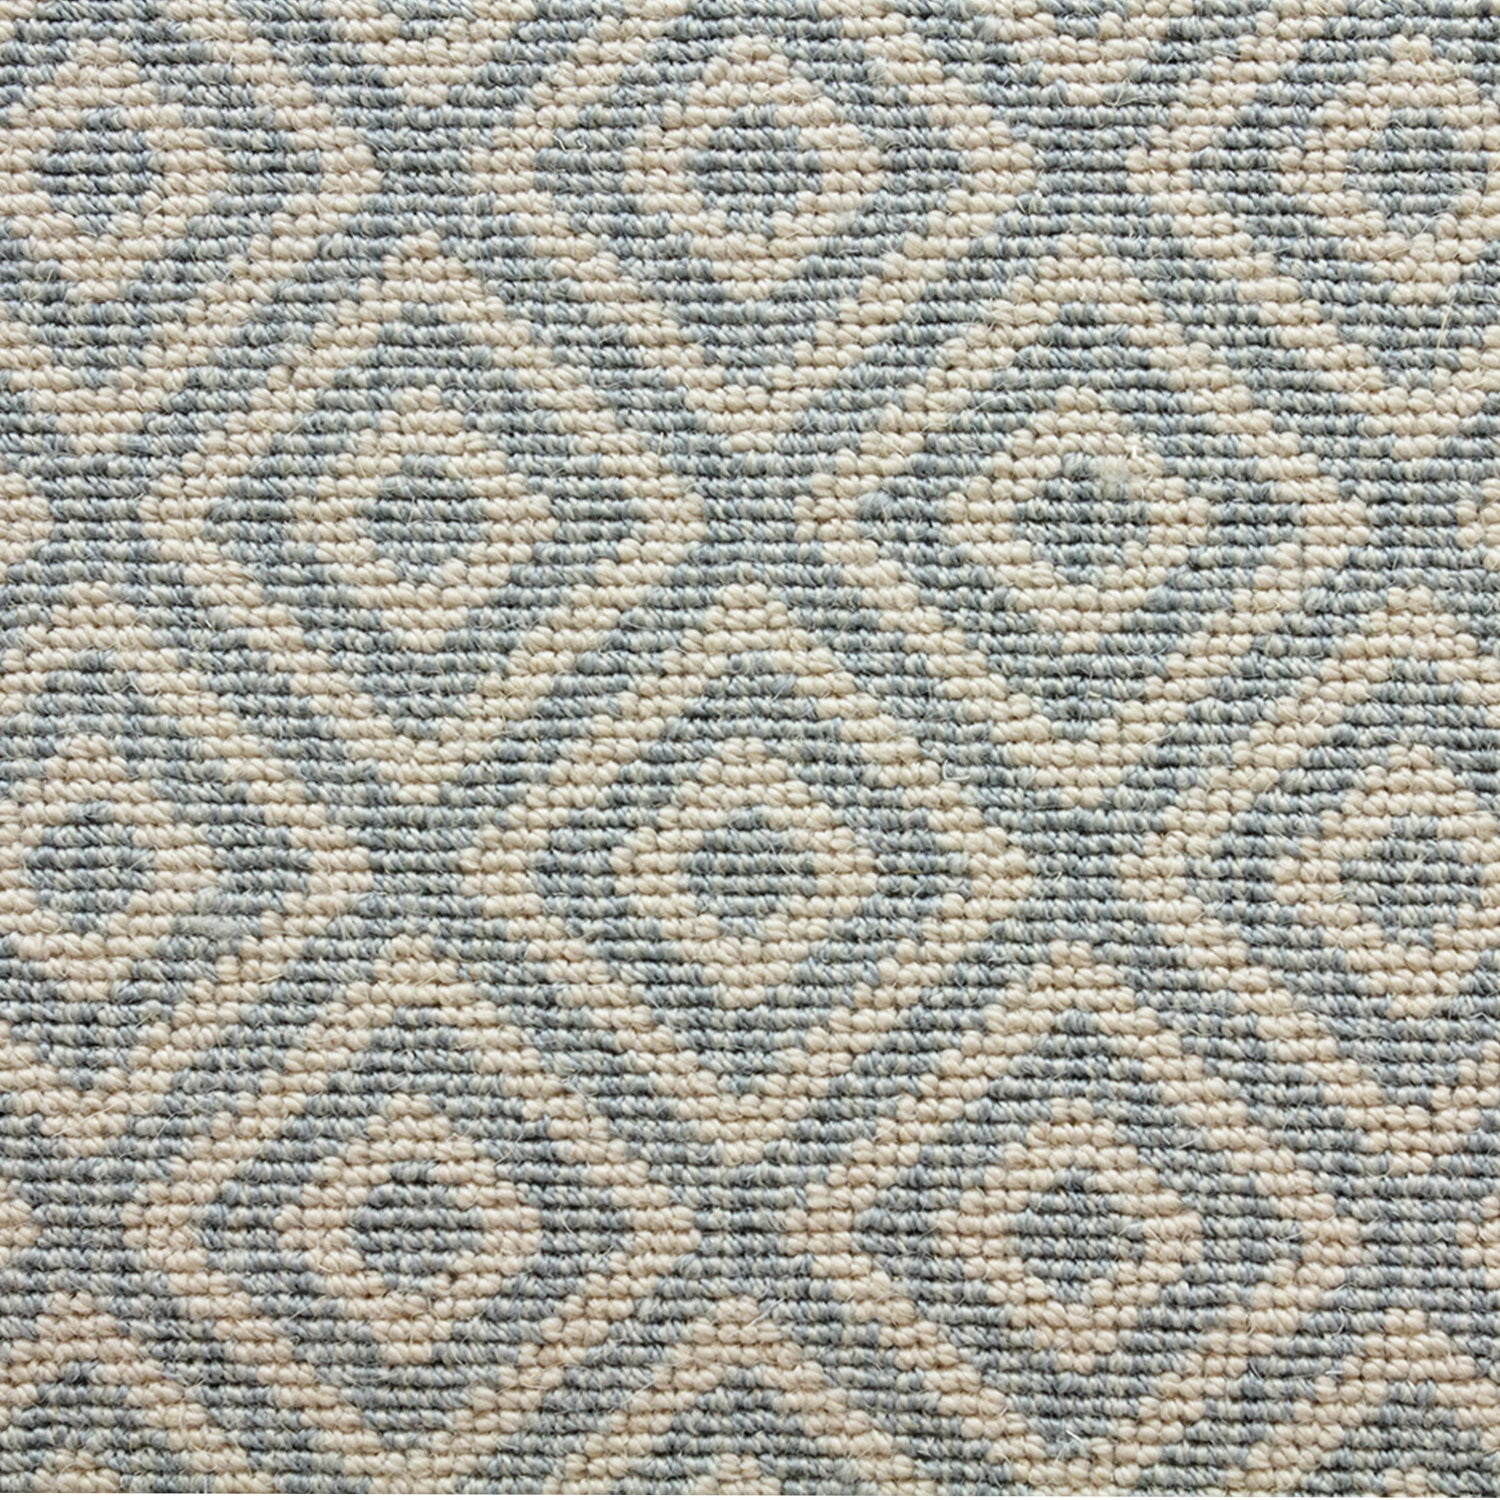 Wool-blend broadloom carpet swatch in a repeating diamond print in blue on a cream field.